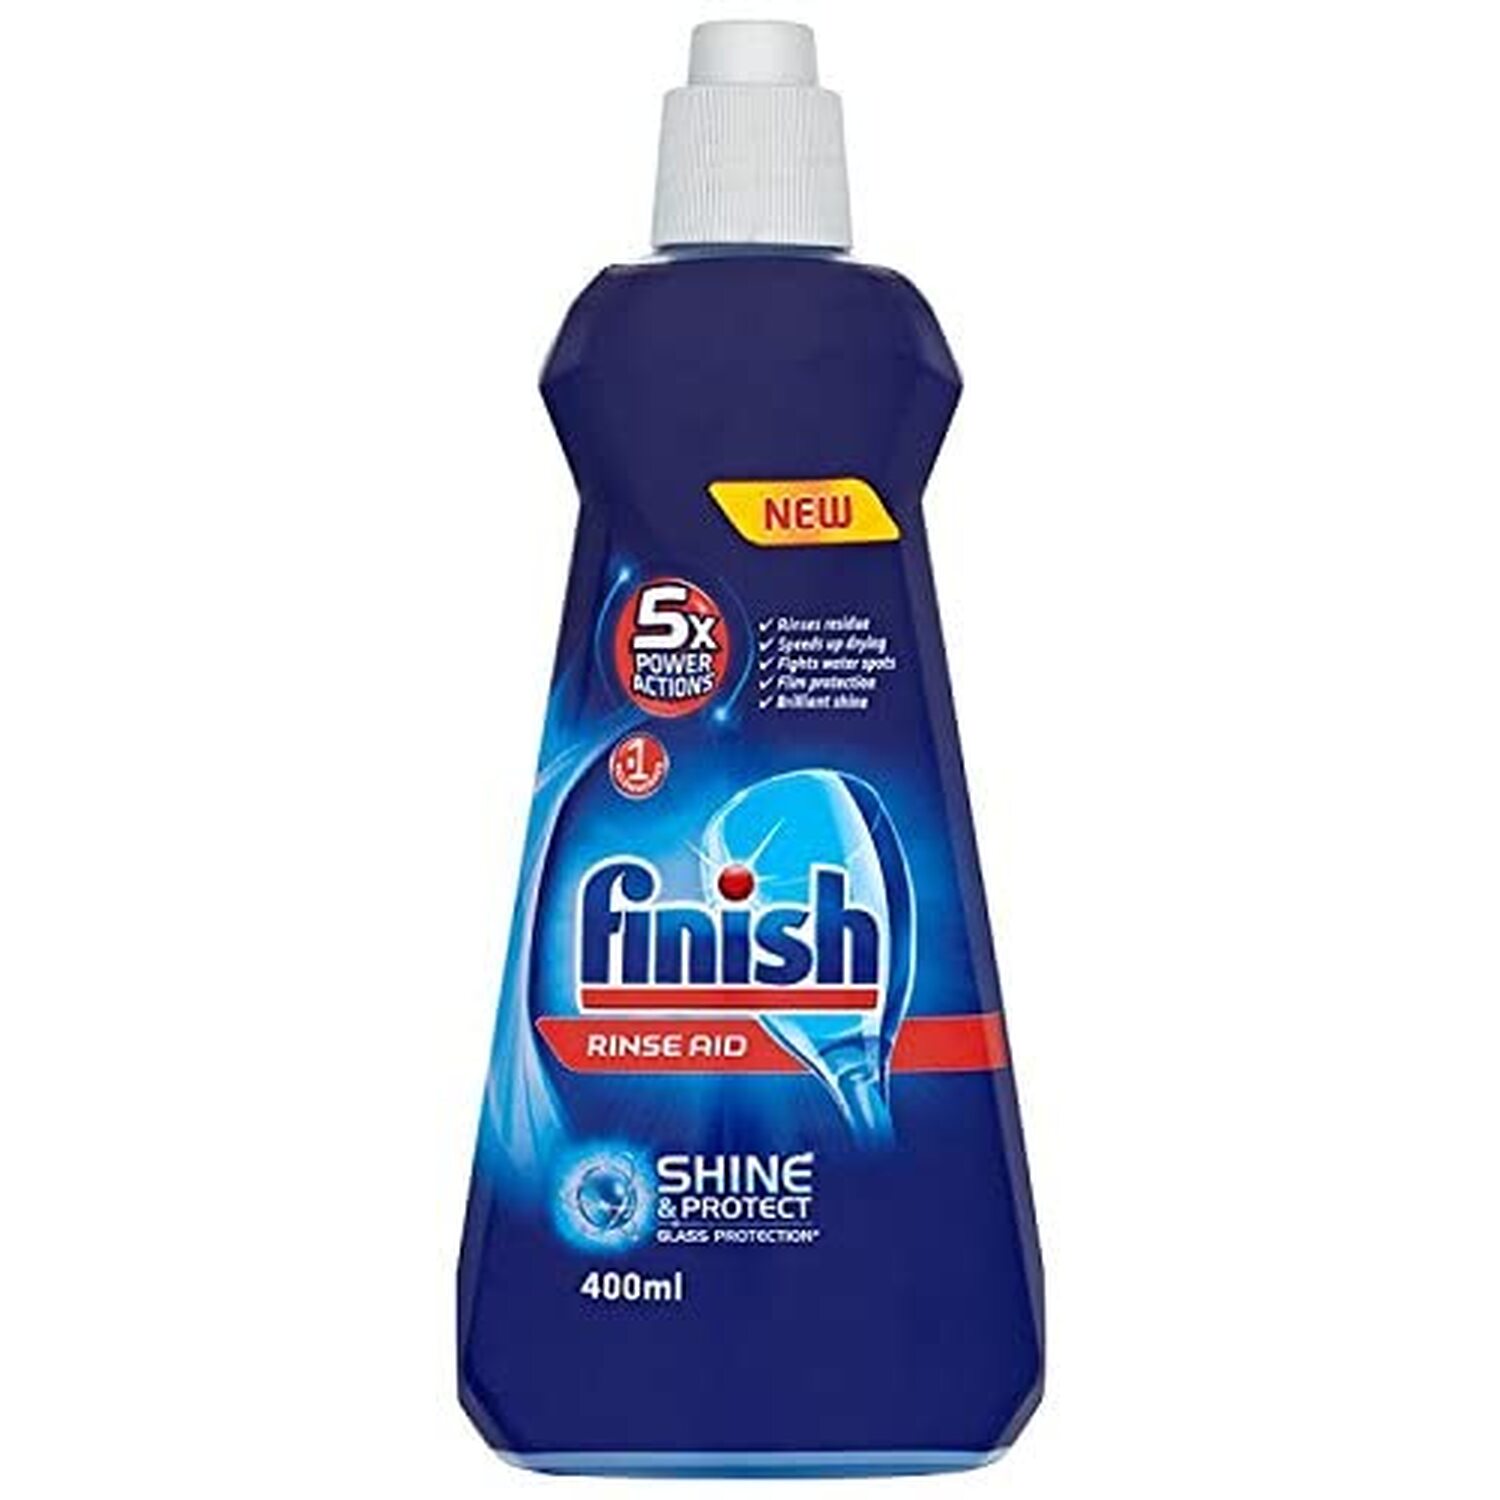 Finish Rinse Aid Original 400ml Image